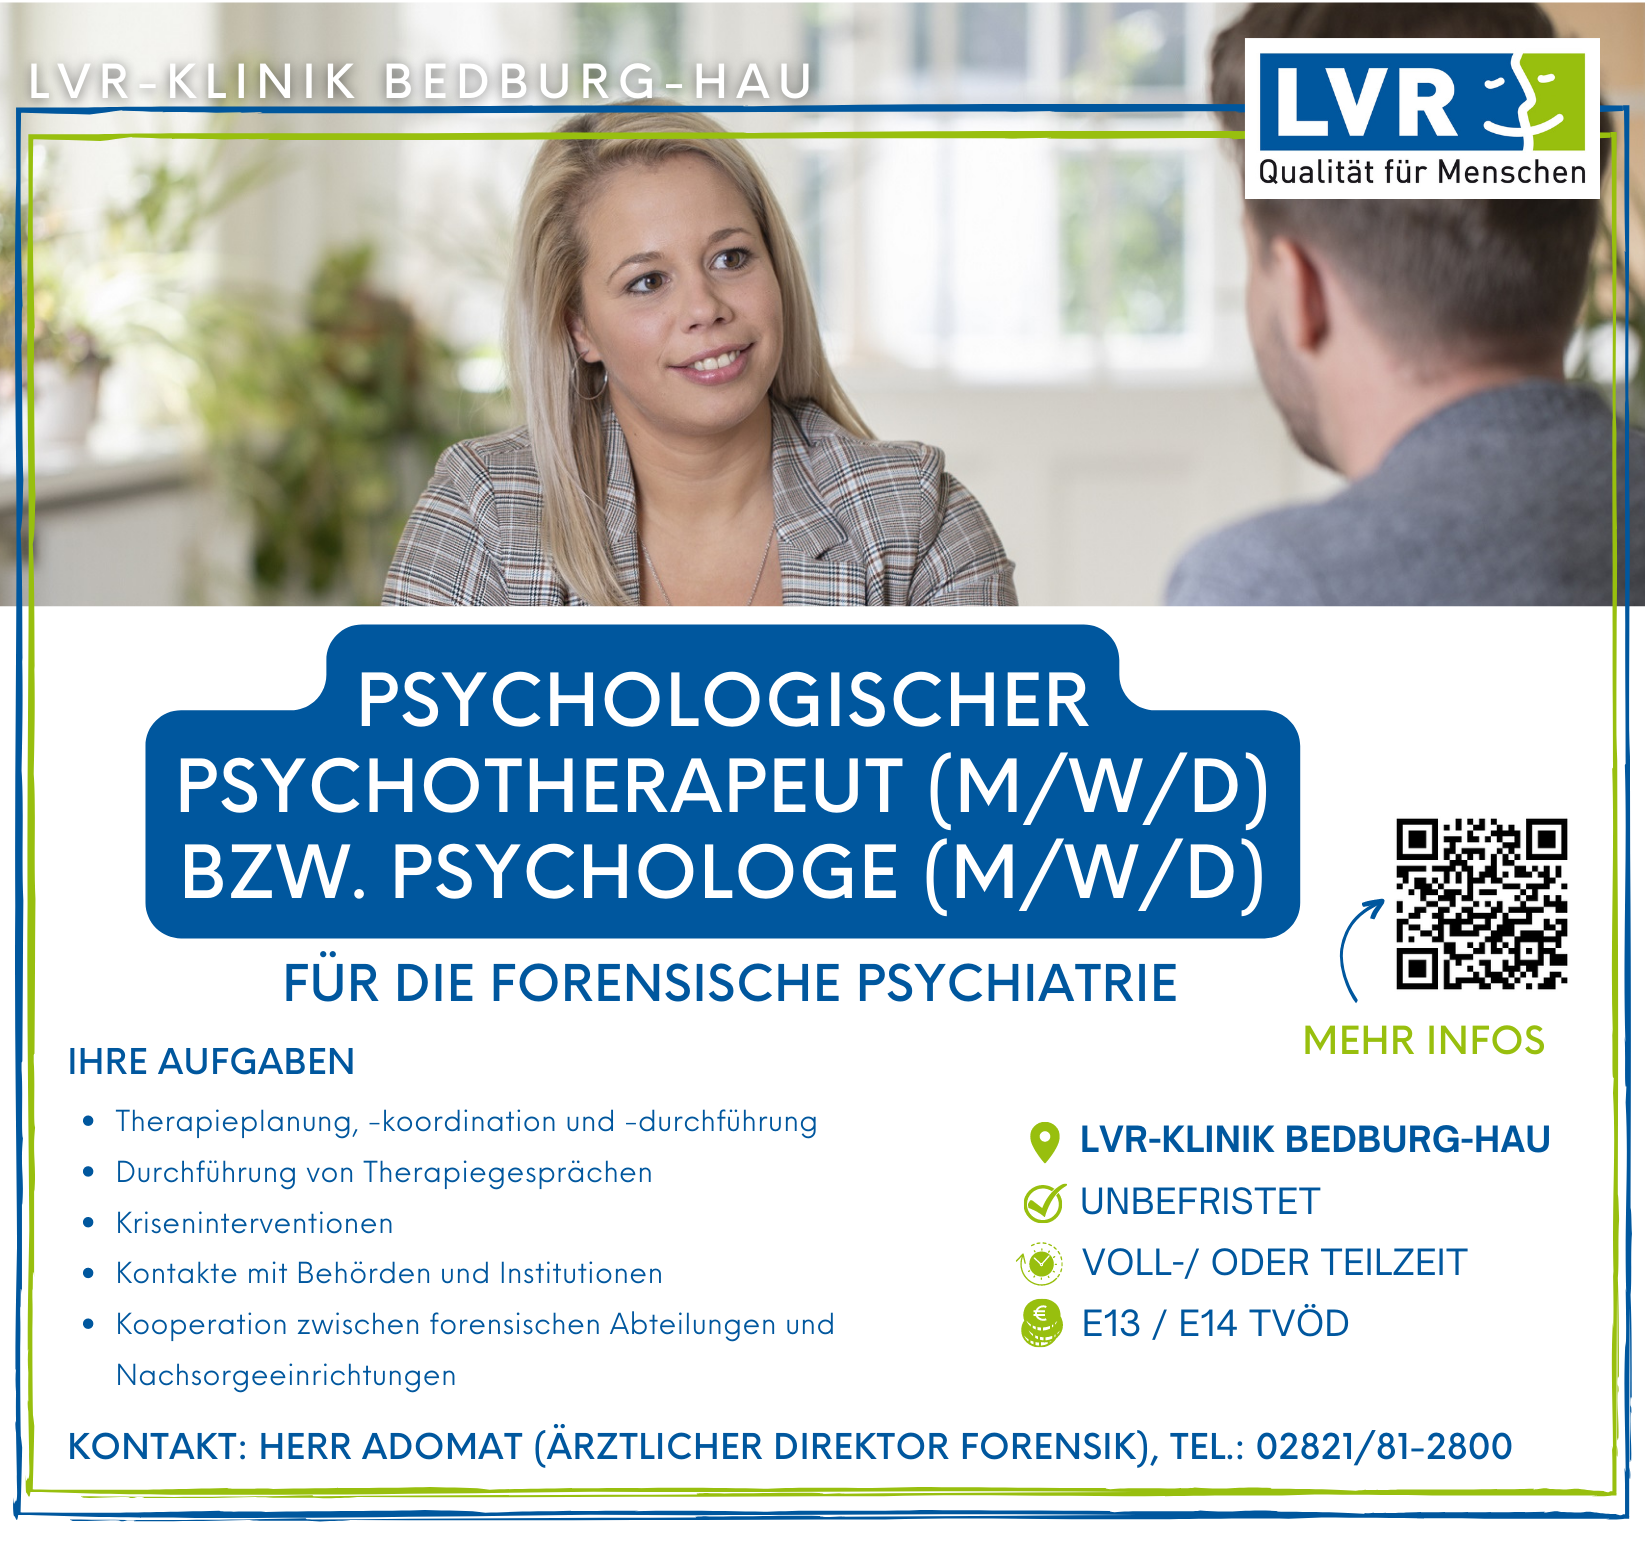 LVR-Klinik Bedburg-Hau Psychologische/r Psychotherapeut/in / Psychologe/in (m/w/d) Forensik Bedburg-Hau stellencompass.de